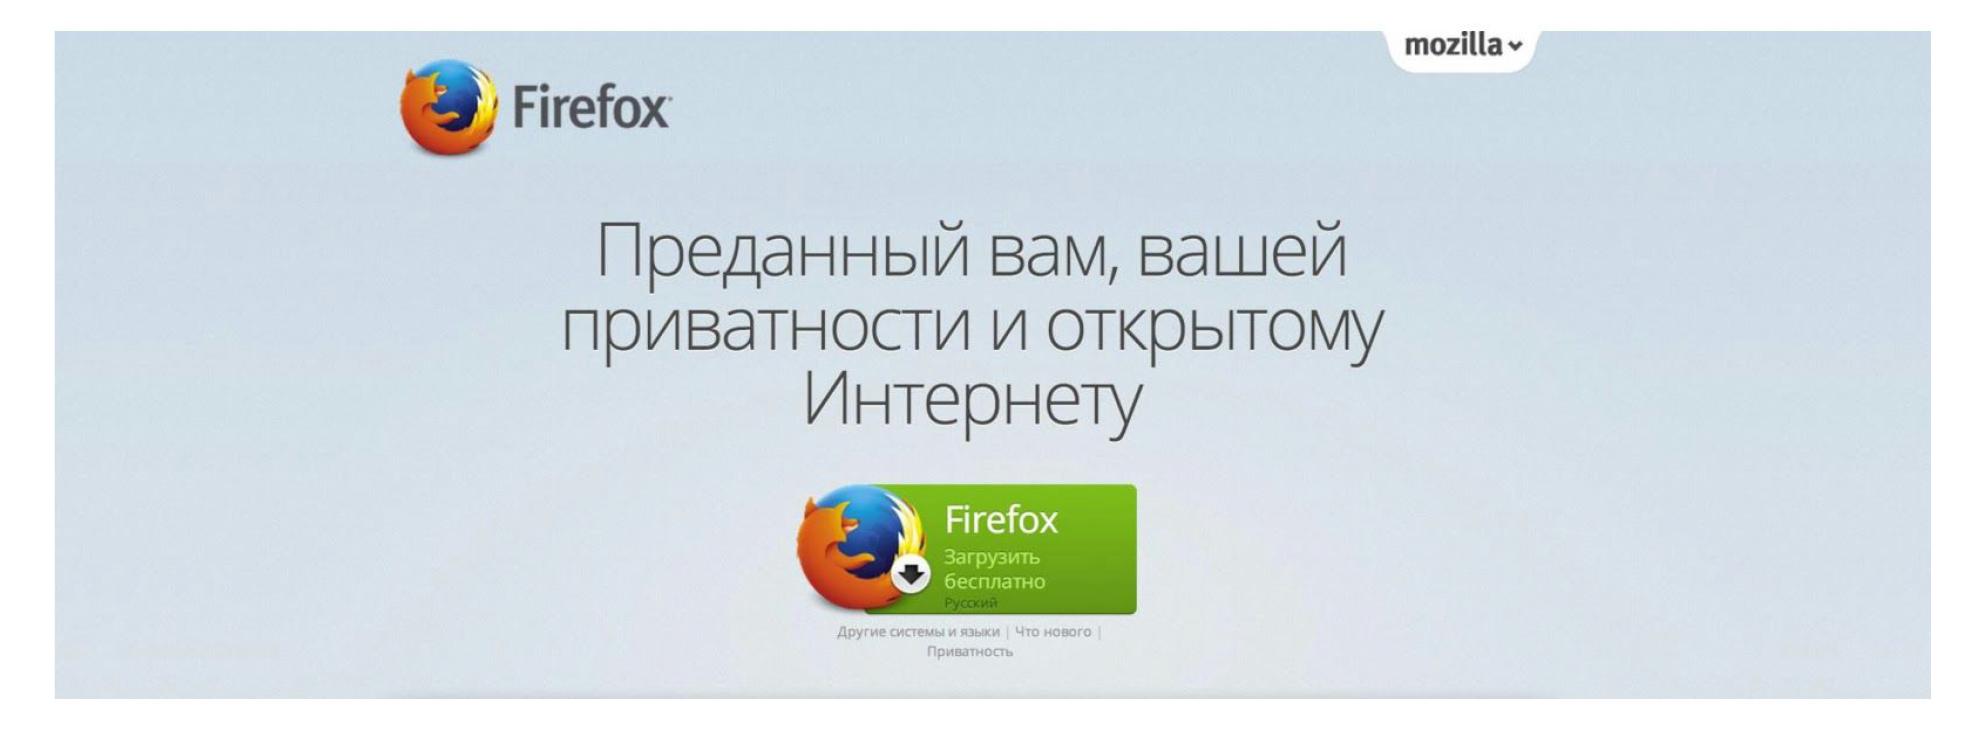 Зеленая кнопка Firefox